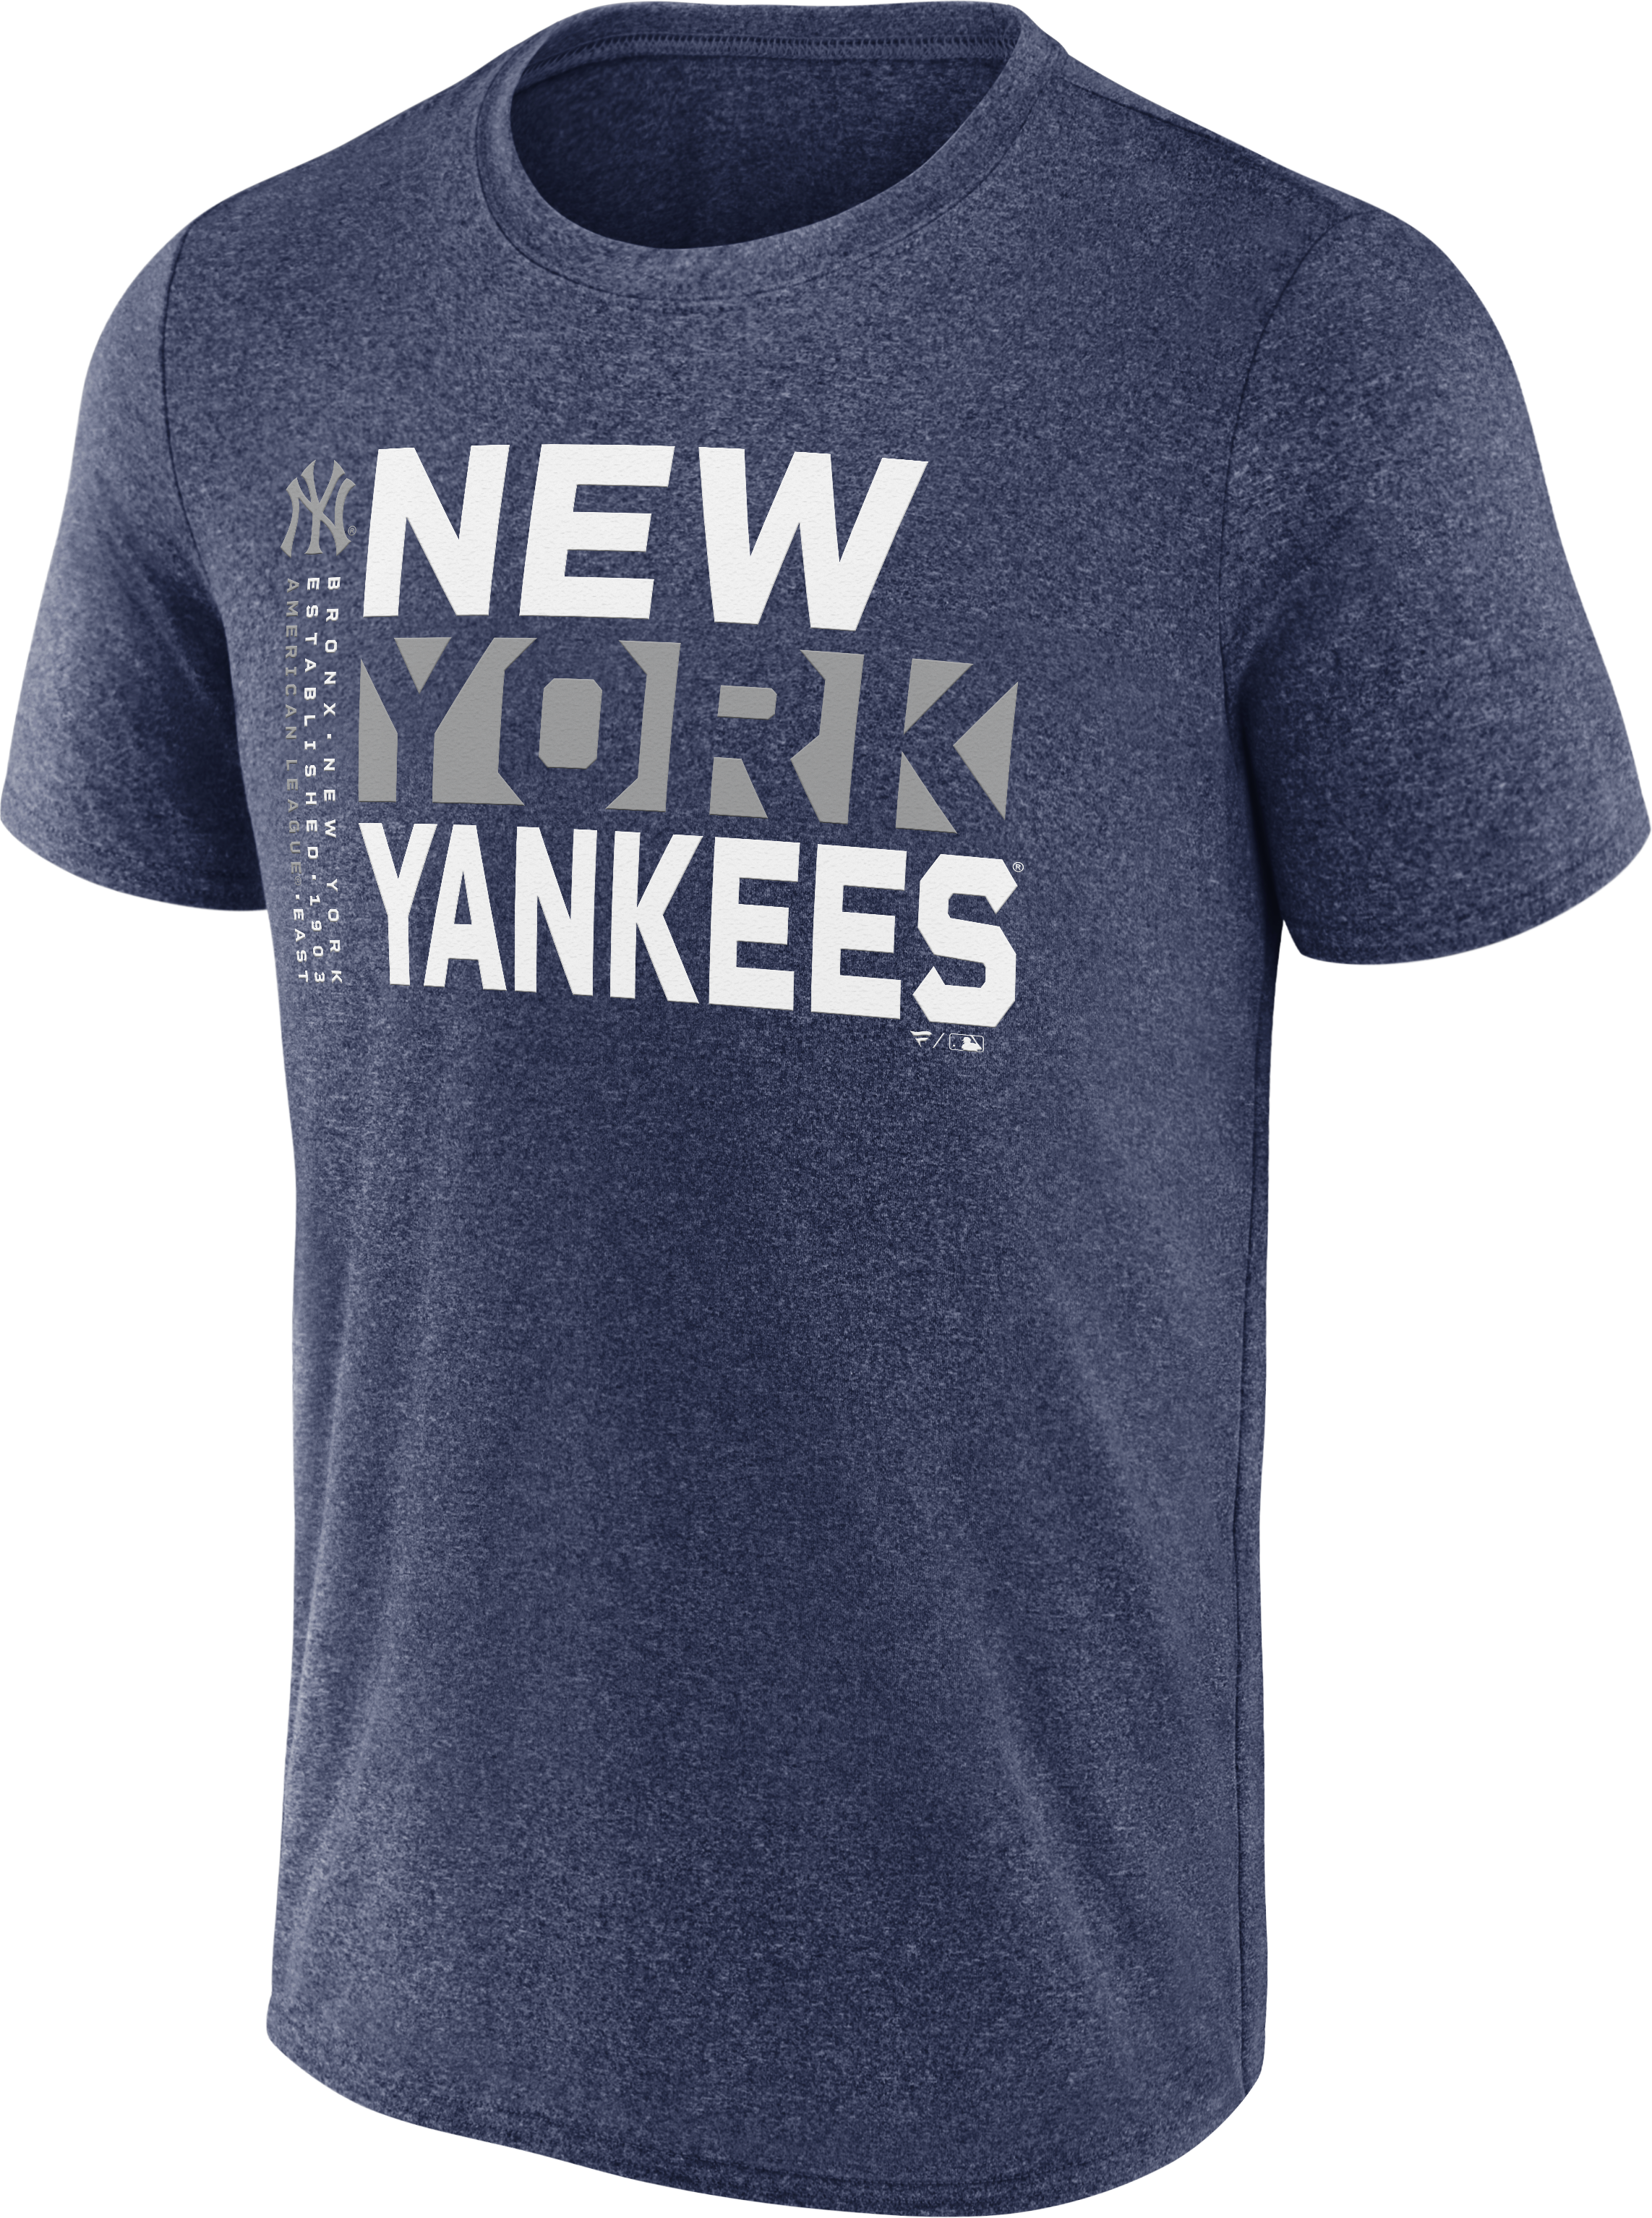 Derek Jeter Career Awards Dri-Fit T-Shirt - Navy NY Yankees Adult T-Shirt